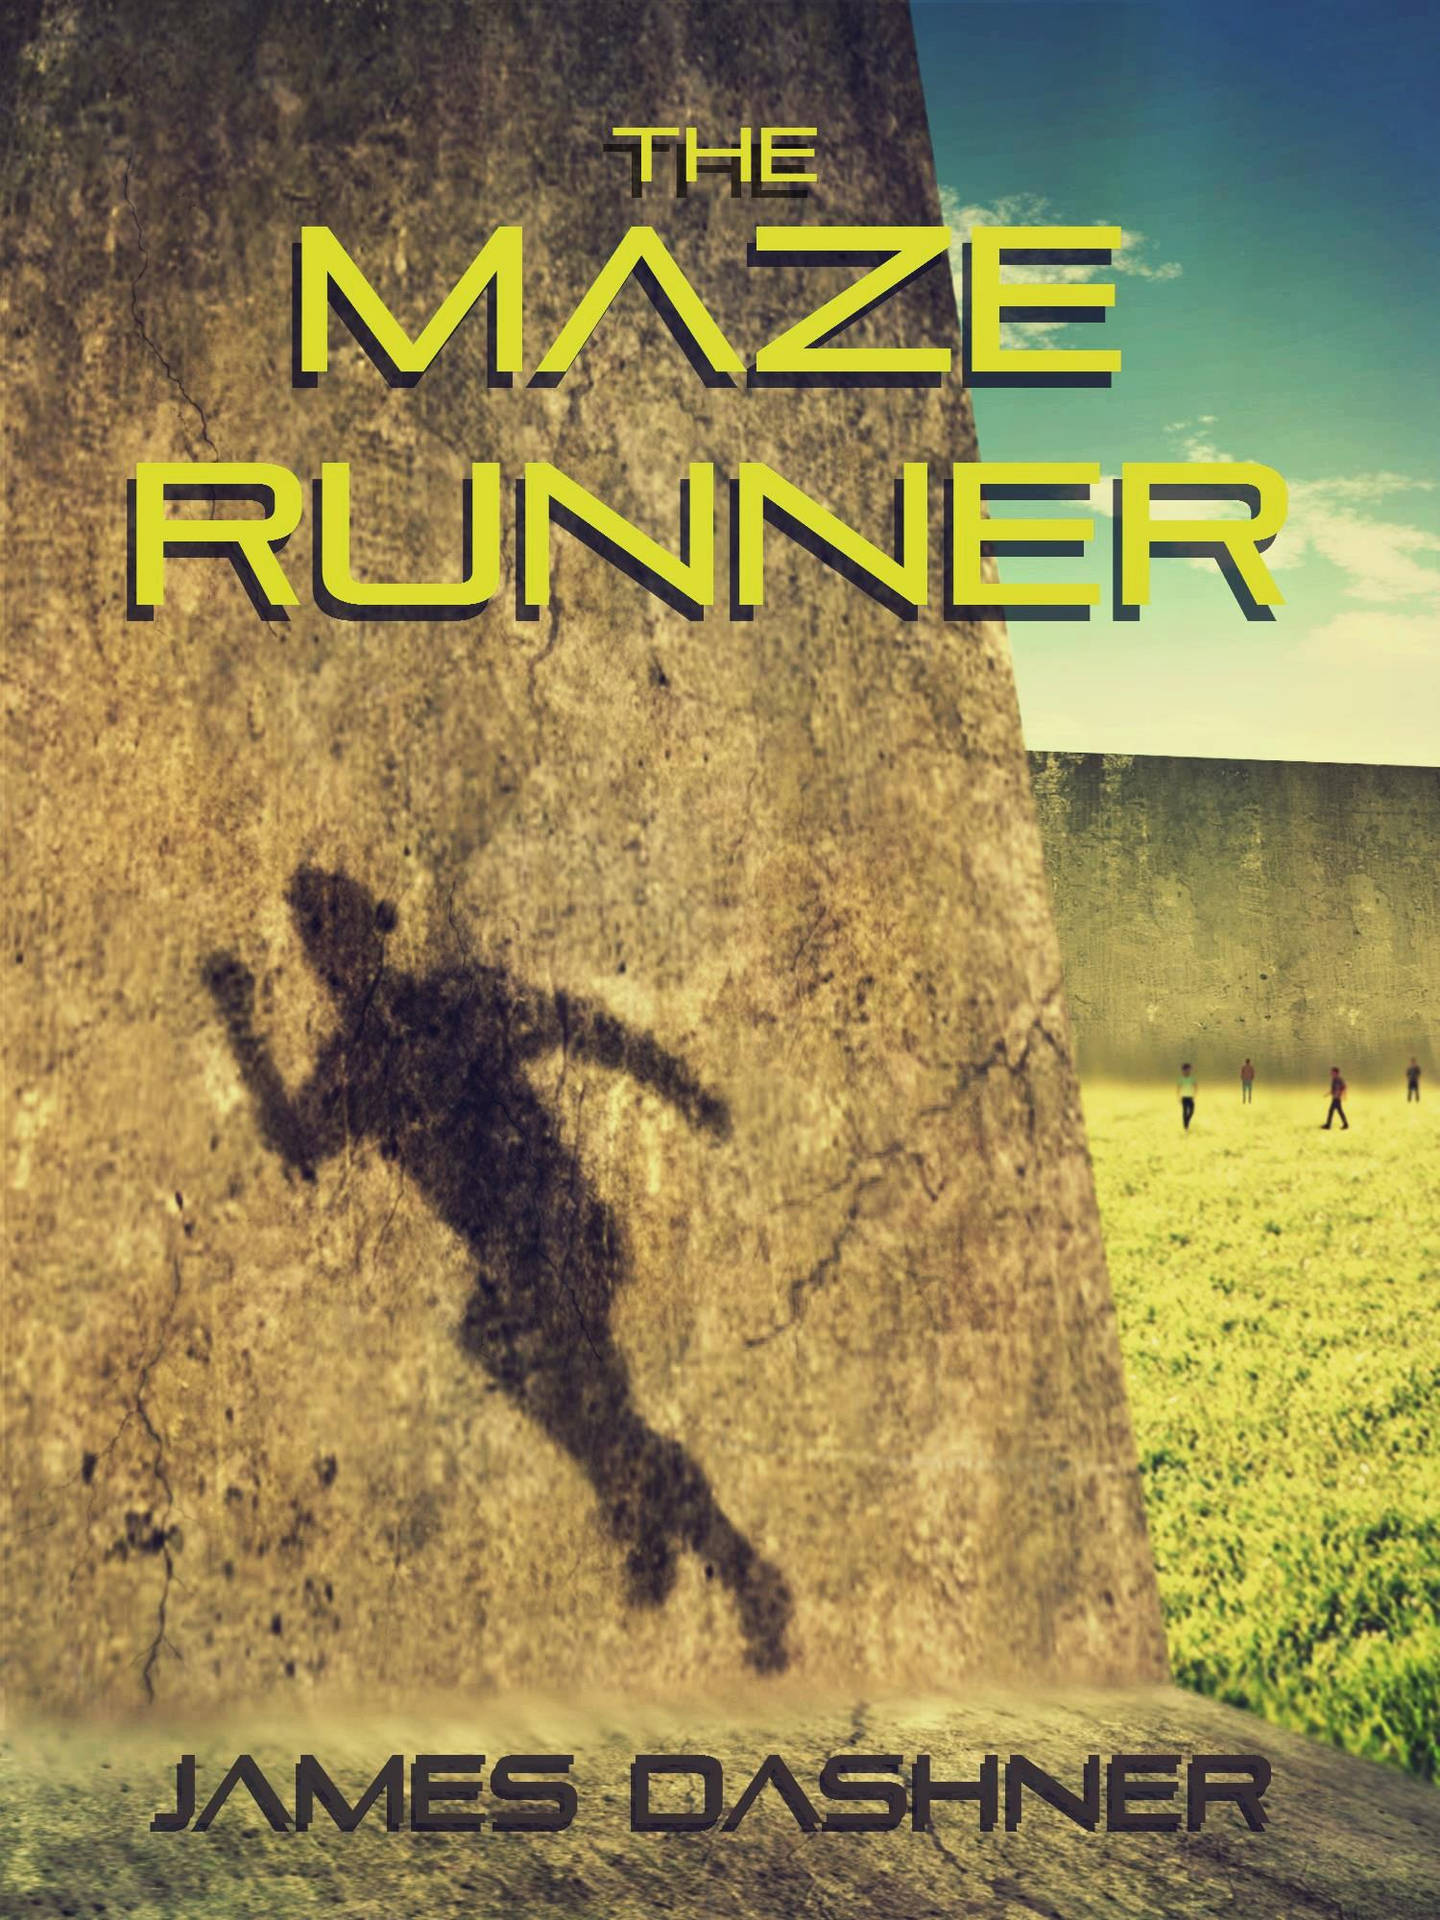 The Maze Runner – Digital Codes HQ